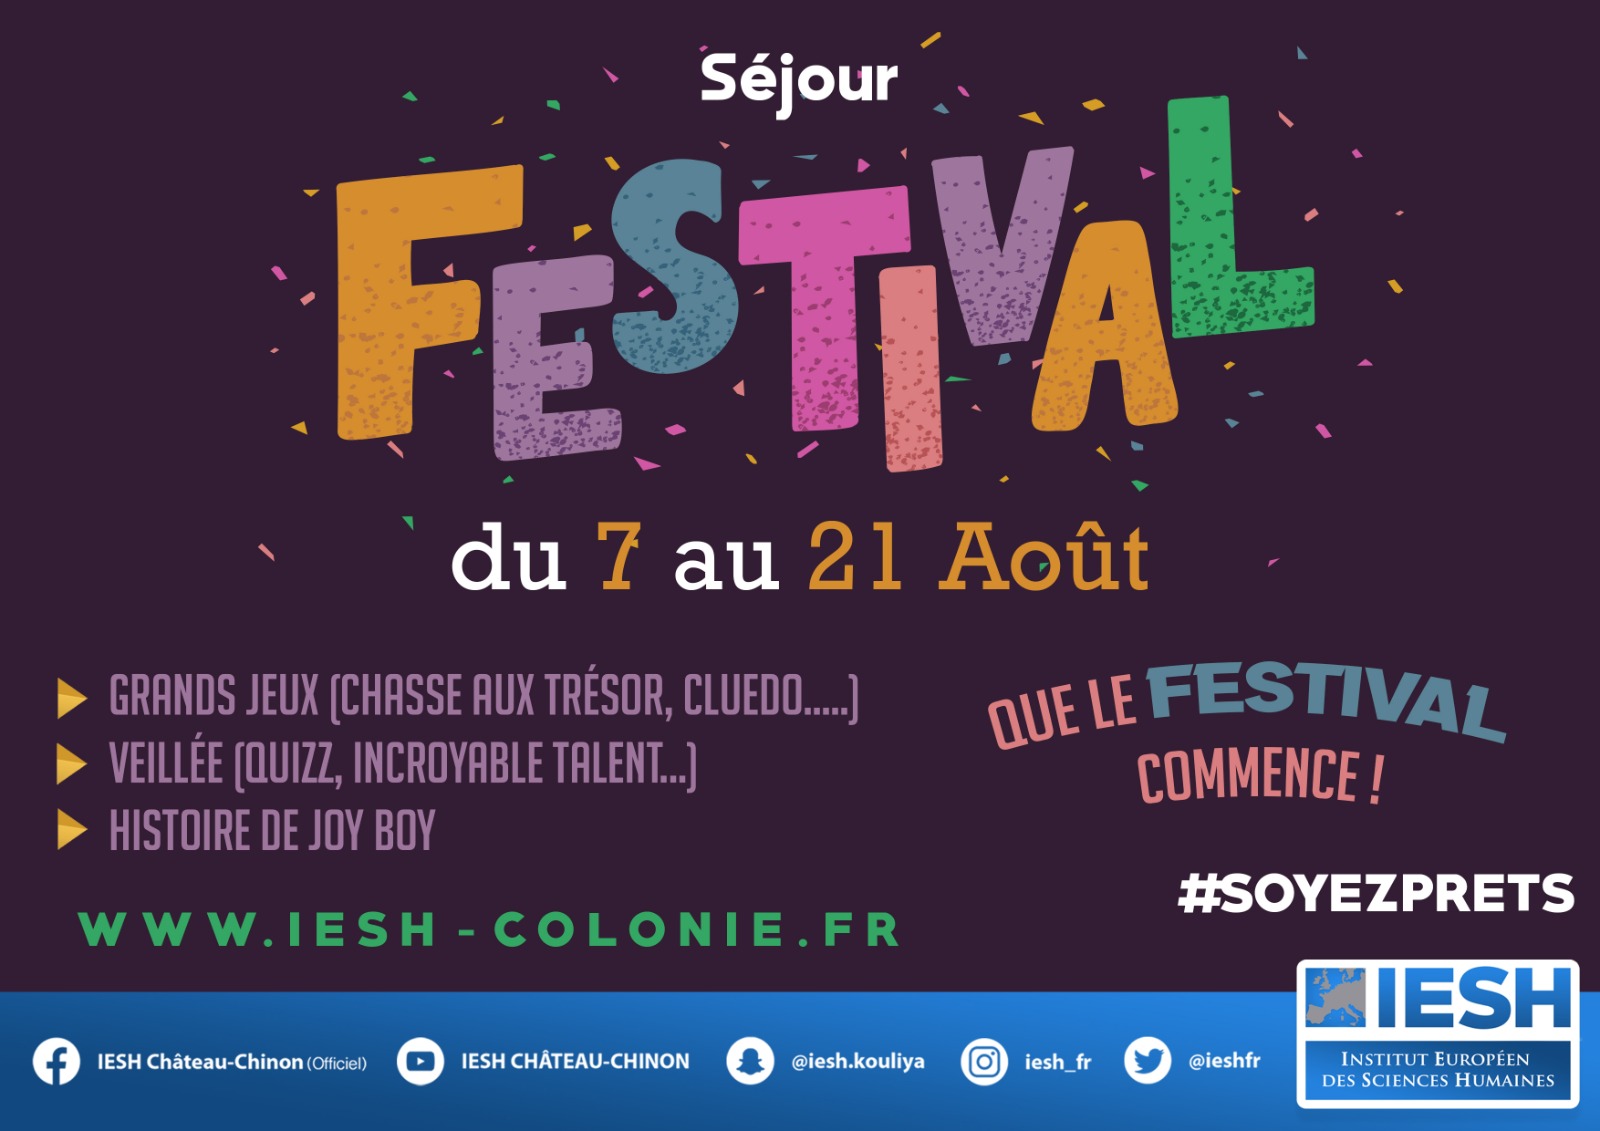 Séjour Festival